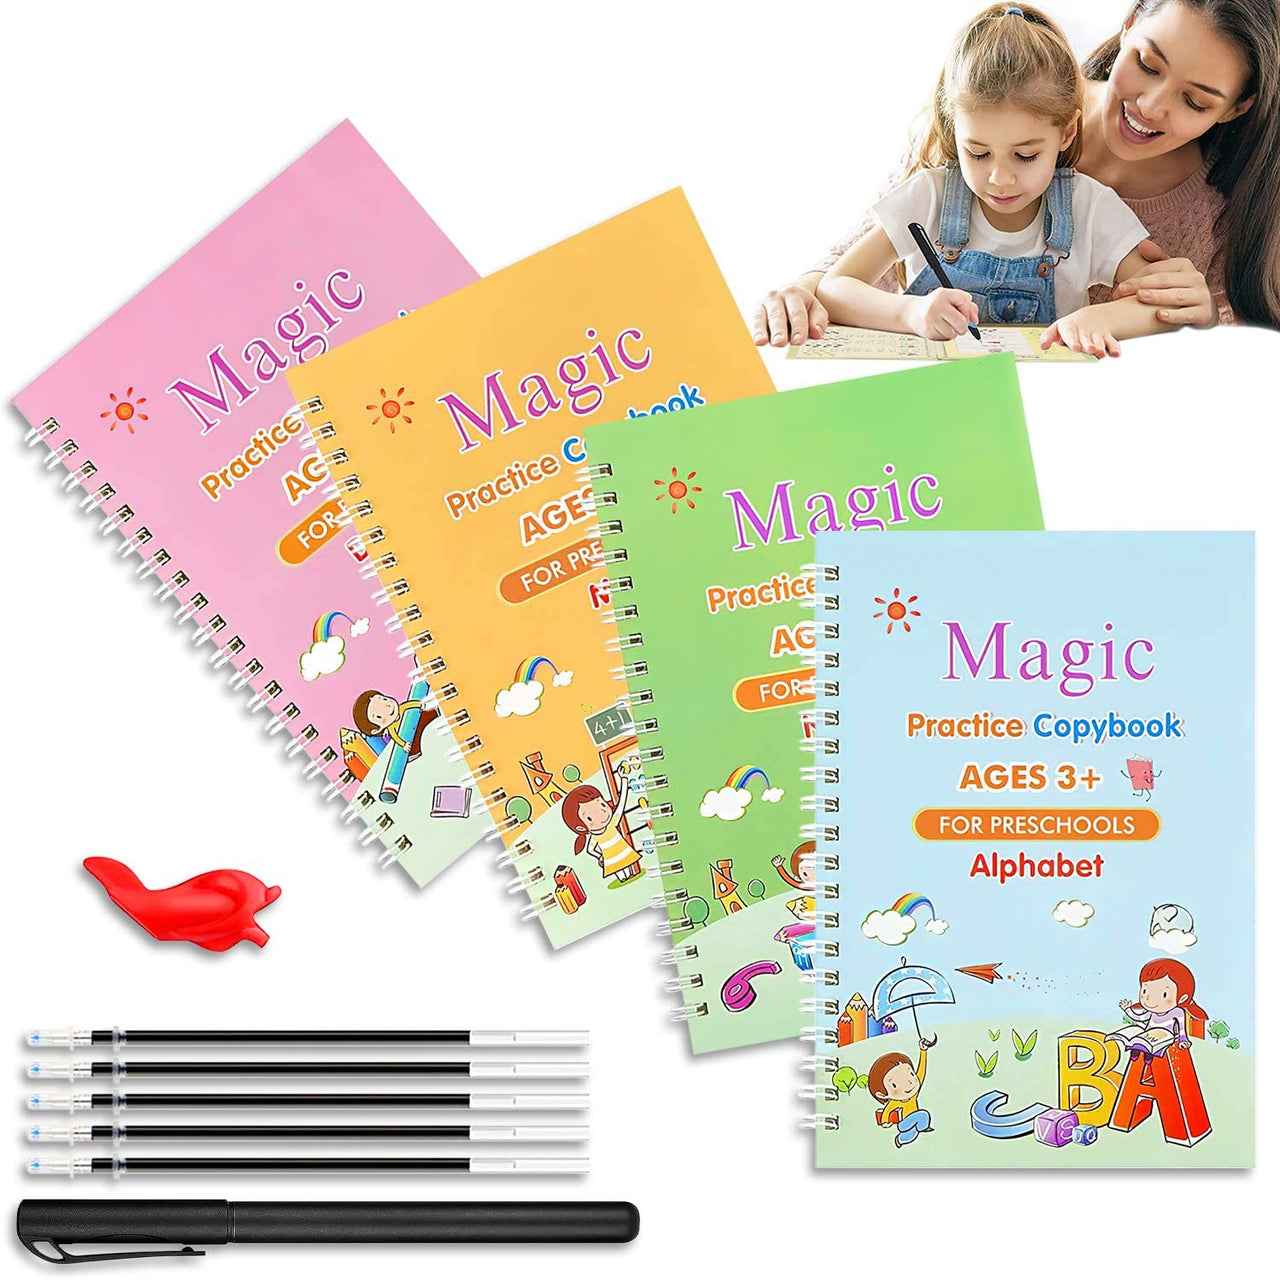 Magic Practice Notebooks for PreSchool - Pack of 4